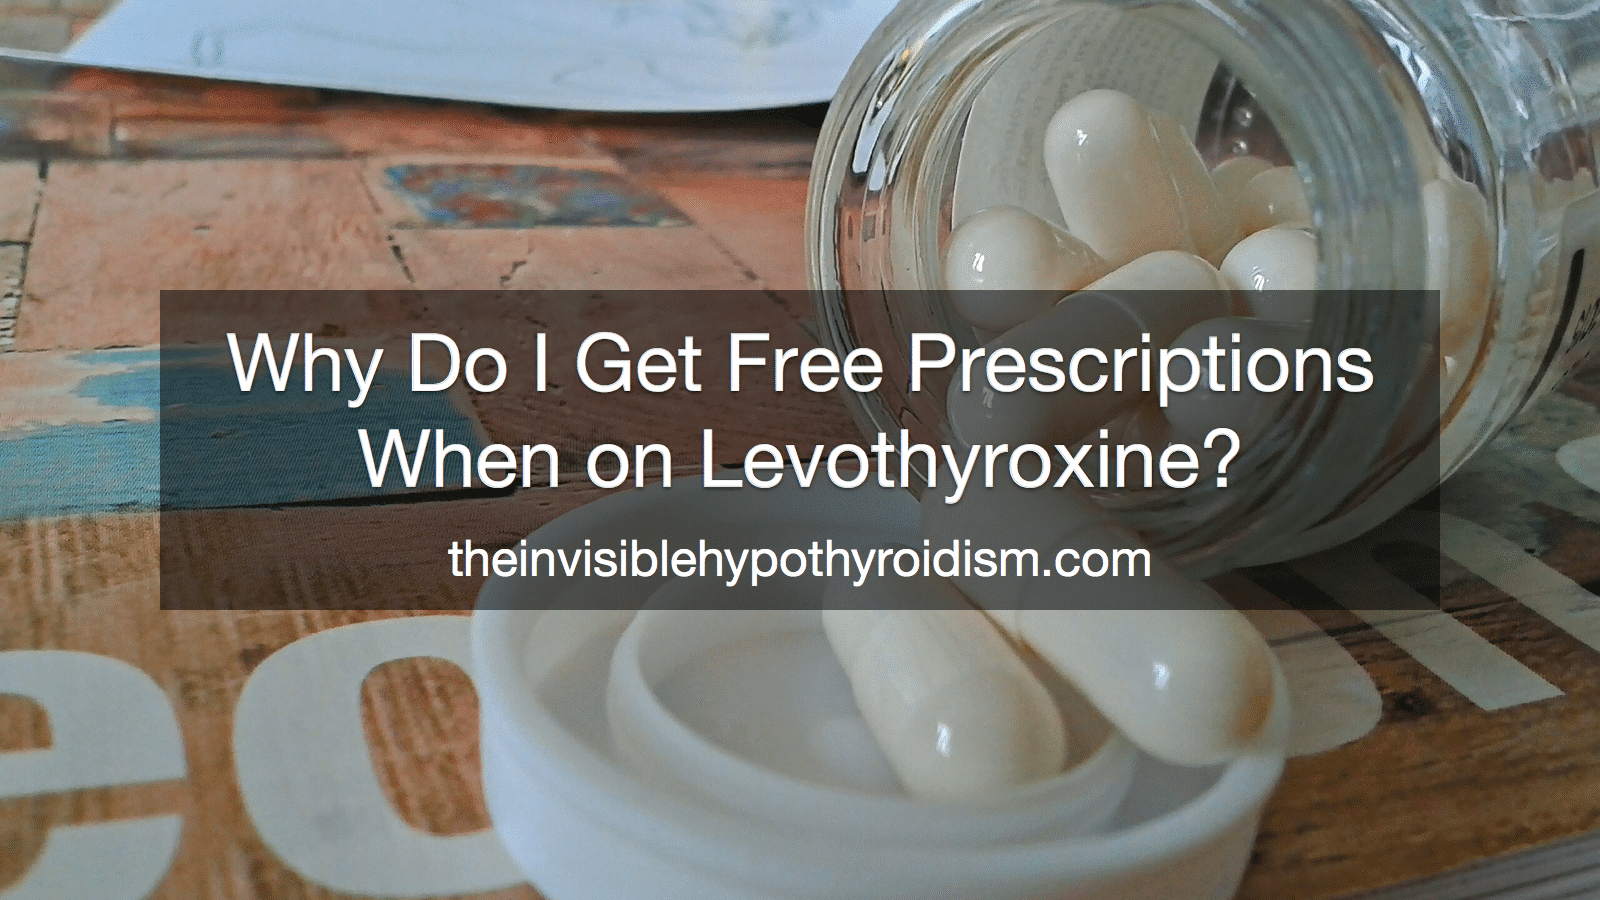 Why Do I Get Free Prescriptions When on Levothyroxine?